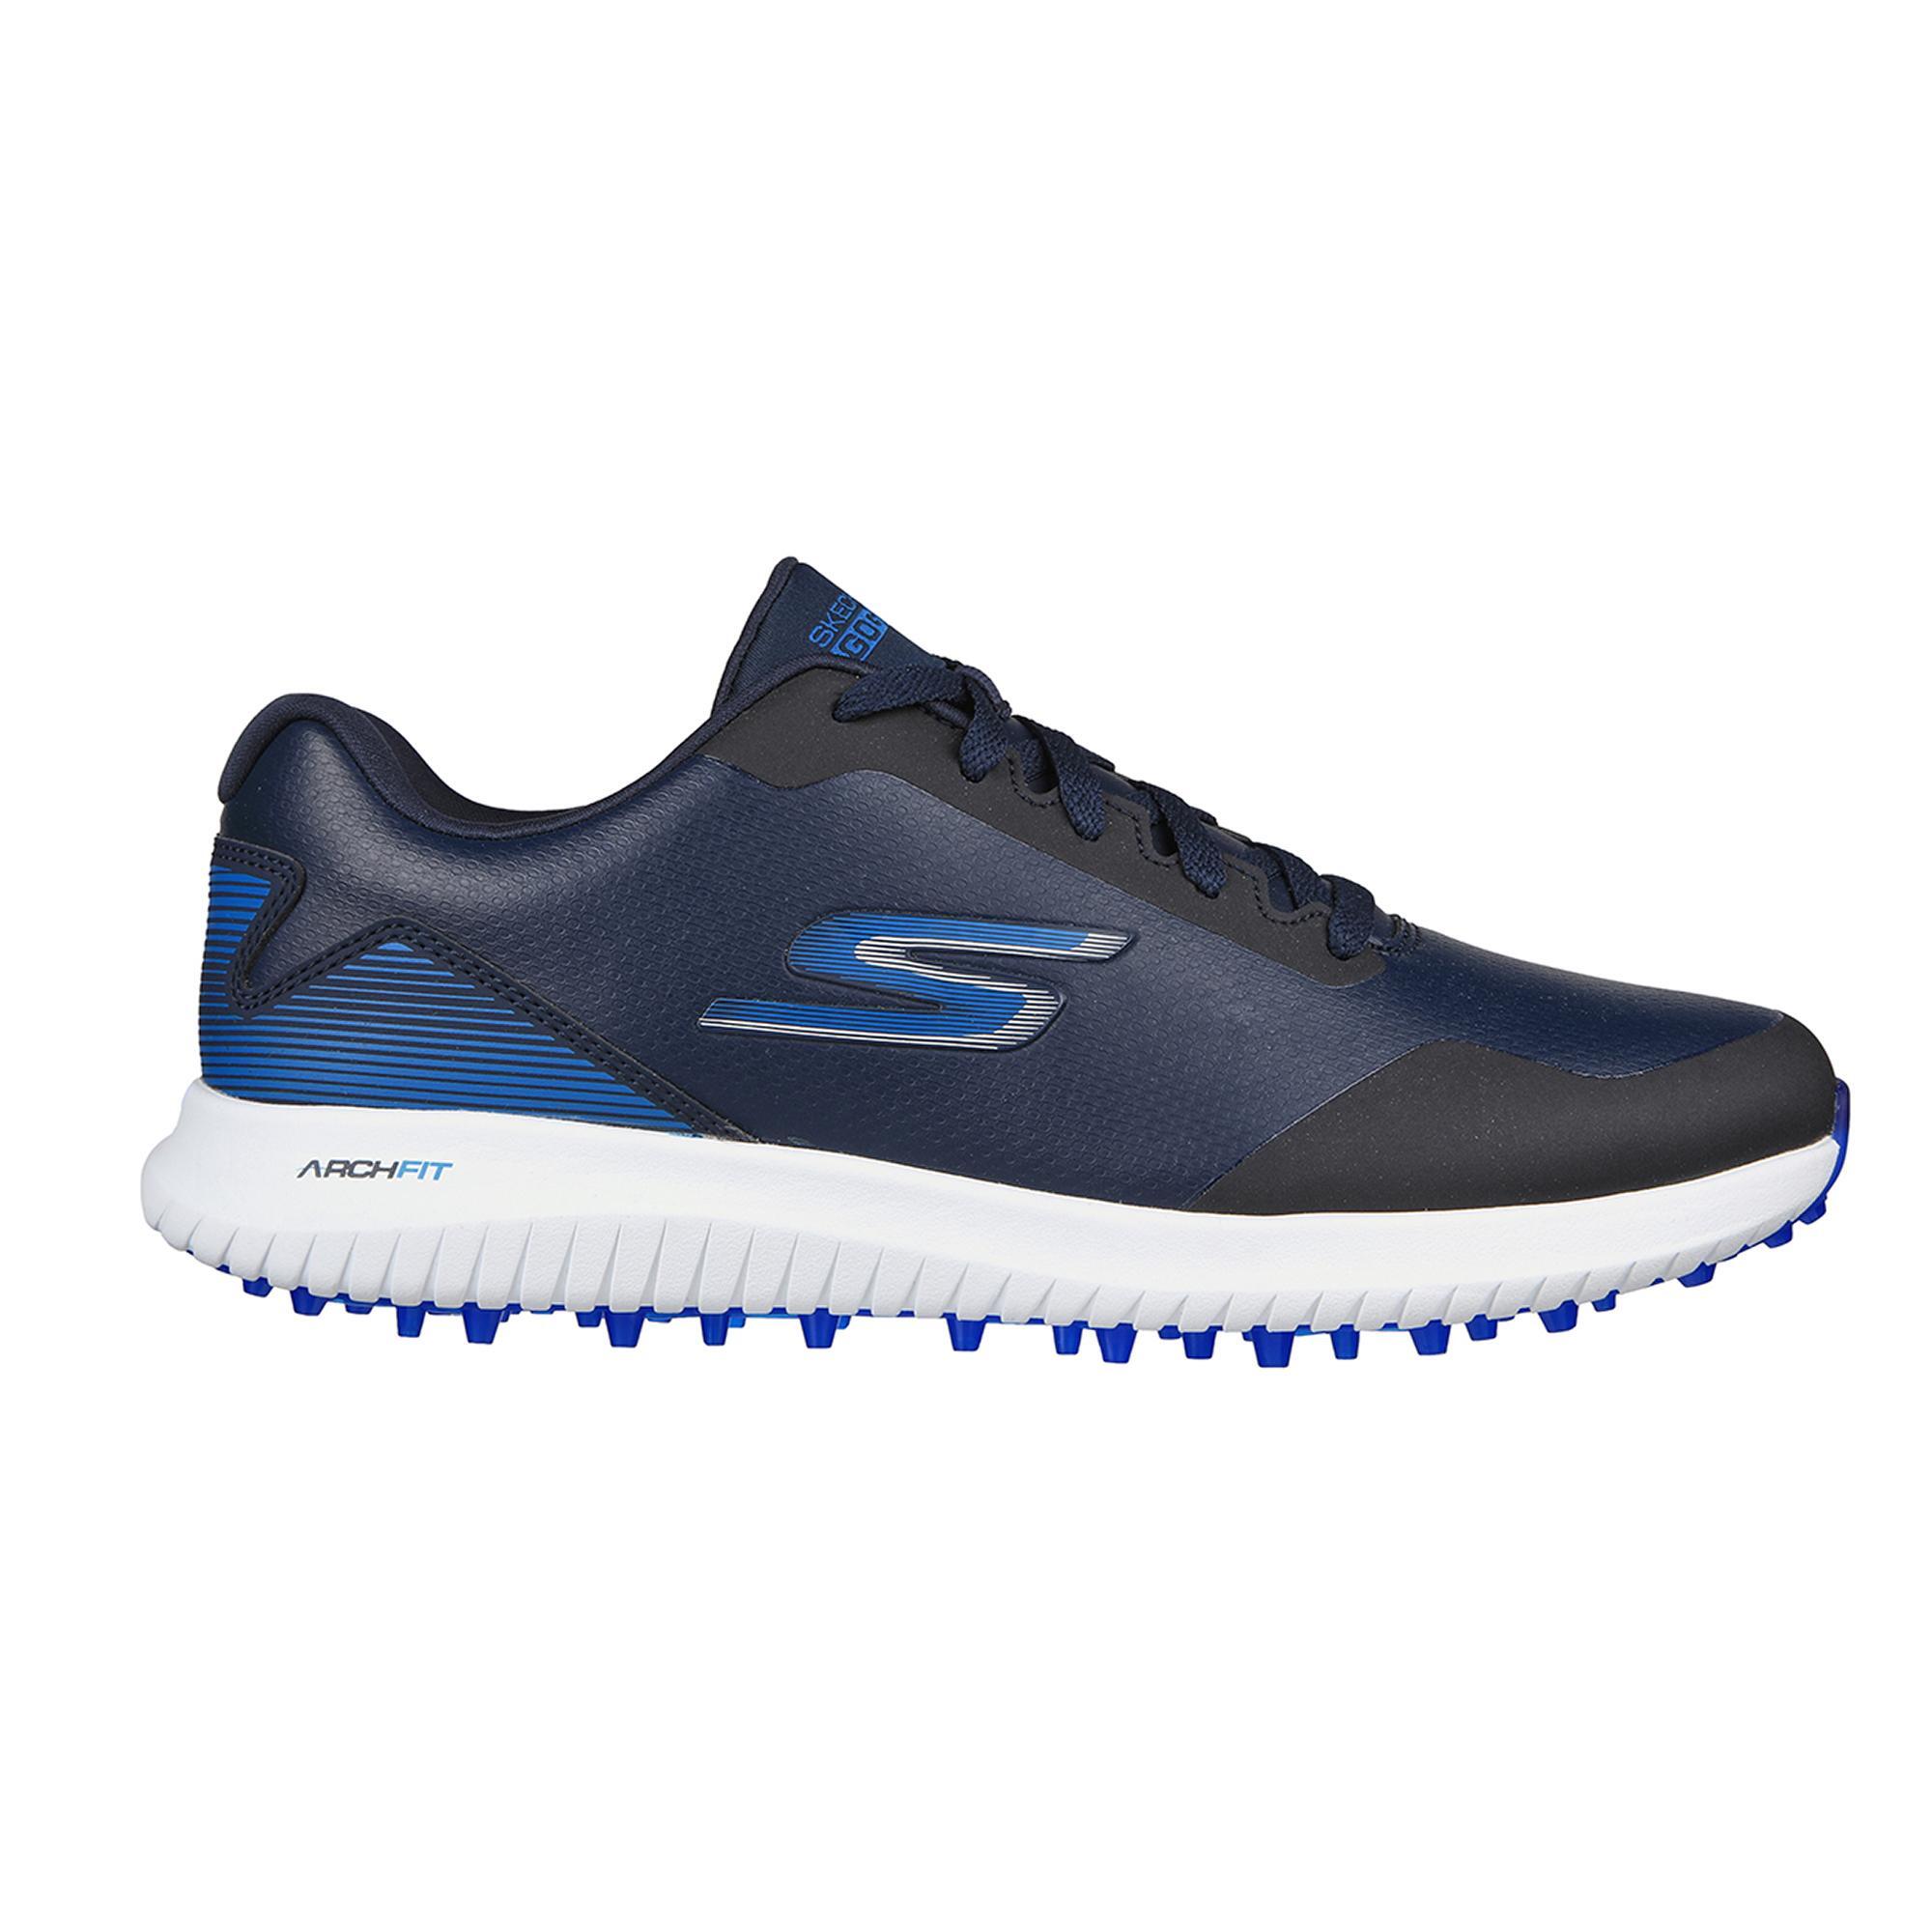 SKECHERS Go Golf Max 2 Golf Shoes Navy blue